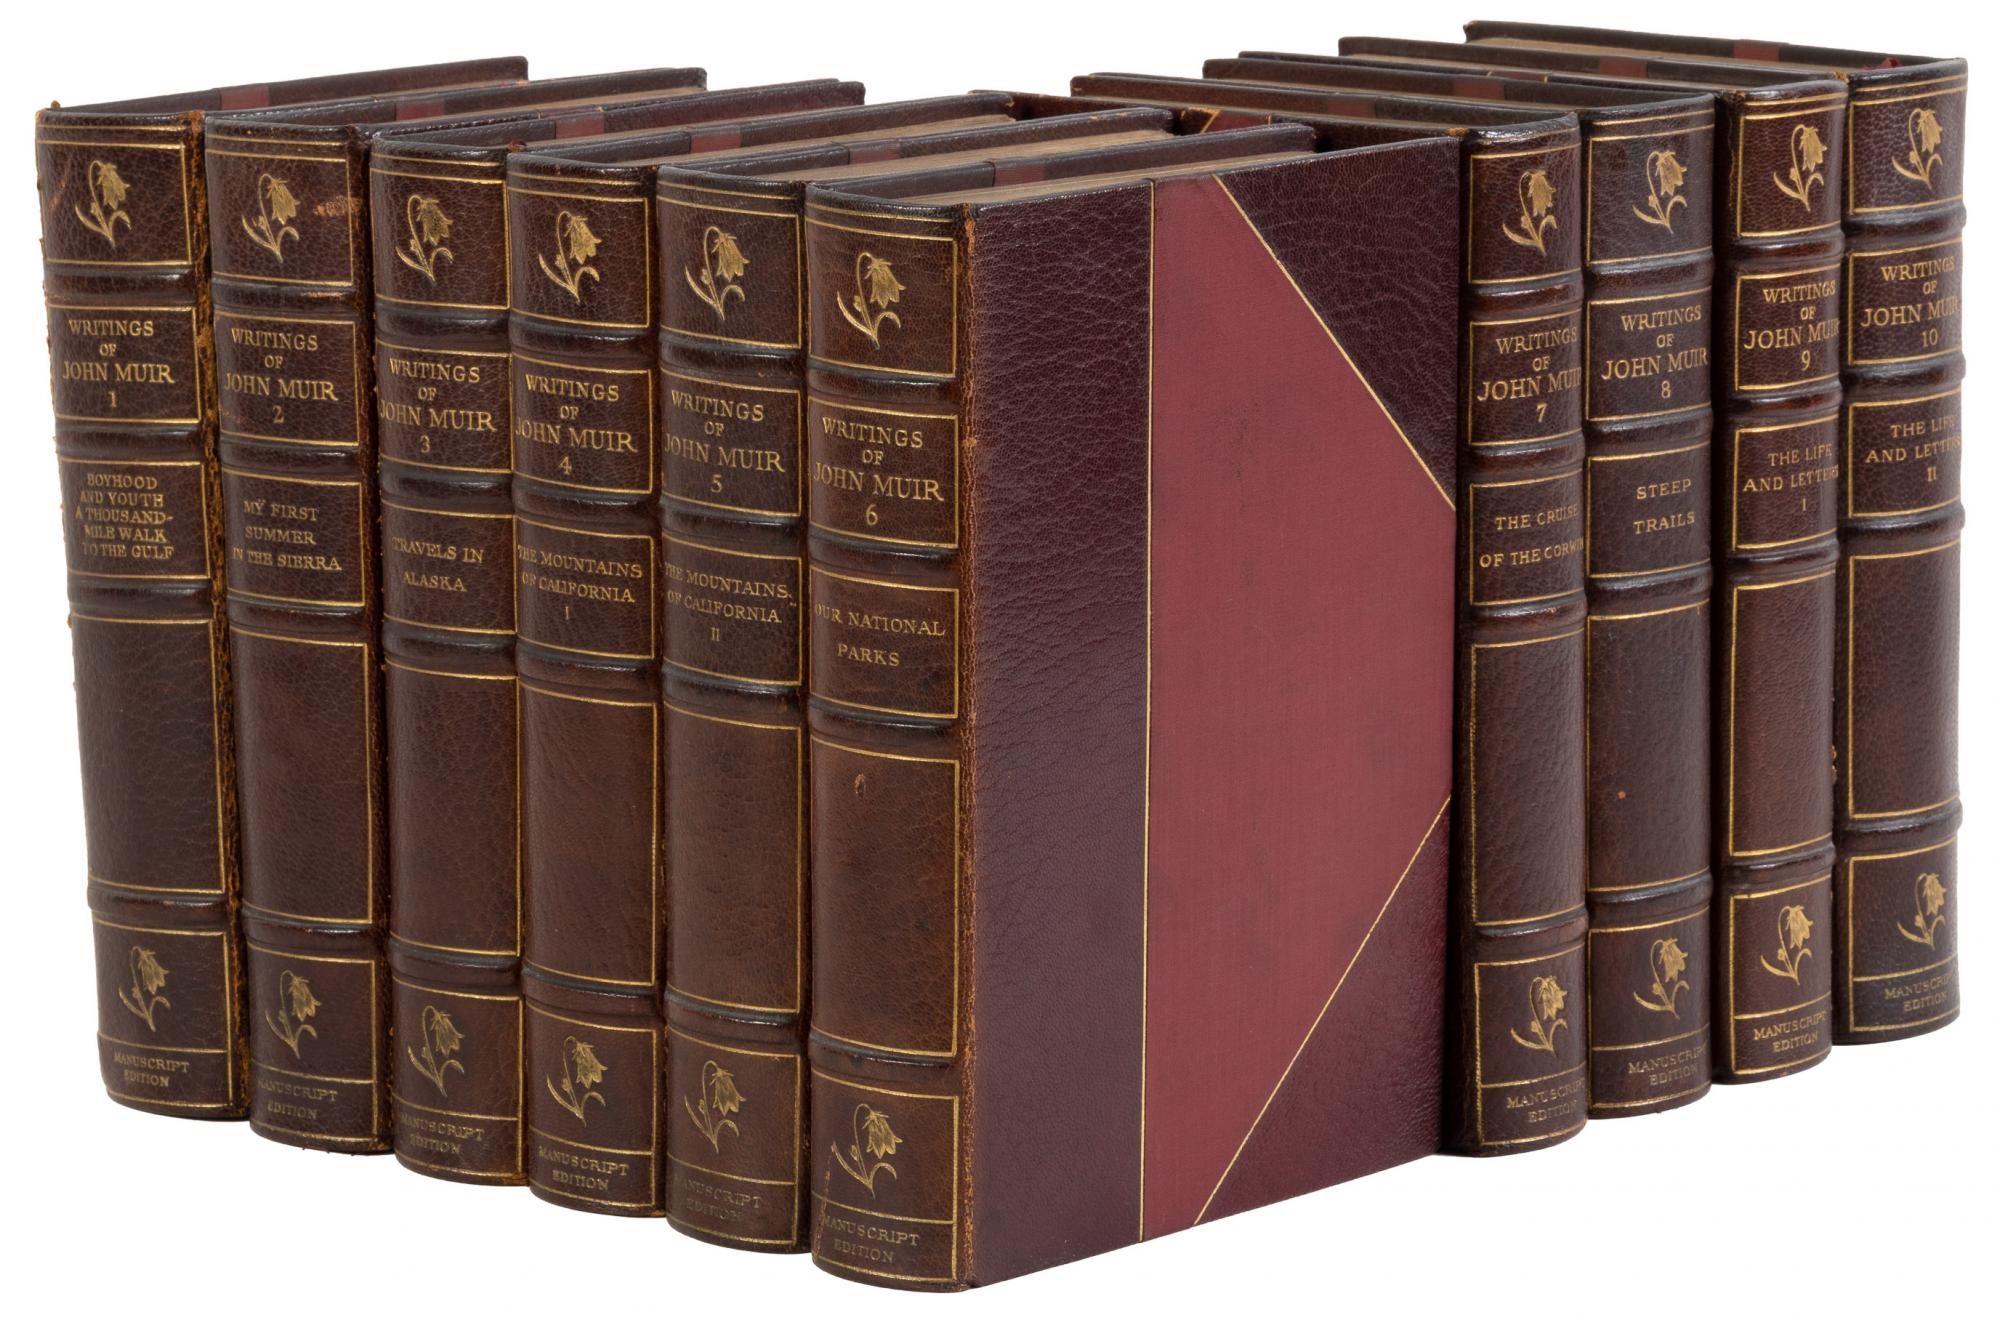 ‘Writings of John Muir’ in 10 volumes, with manuscript leaf, est. $5,000-$8,000